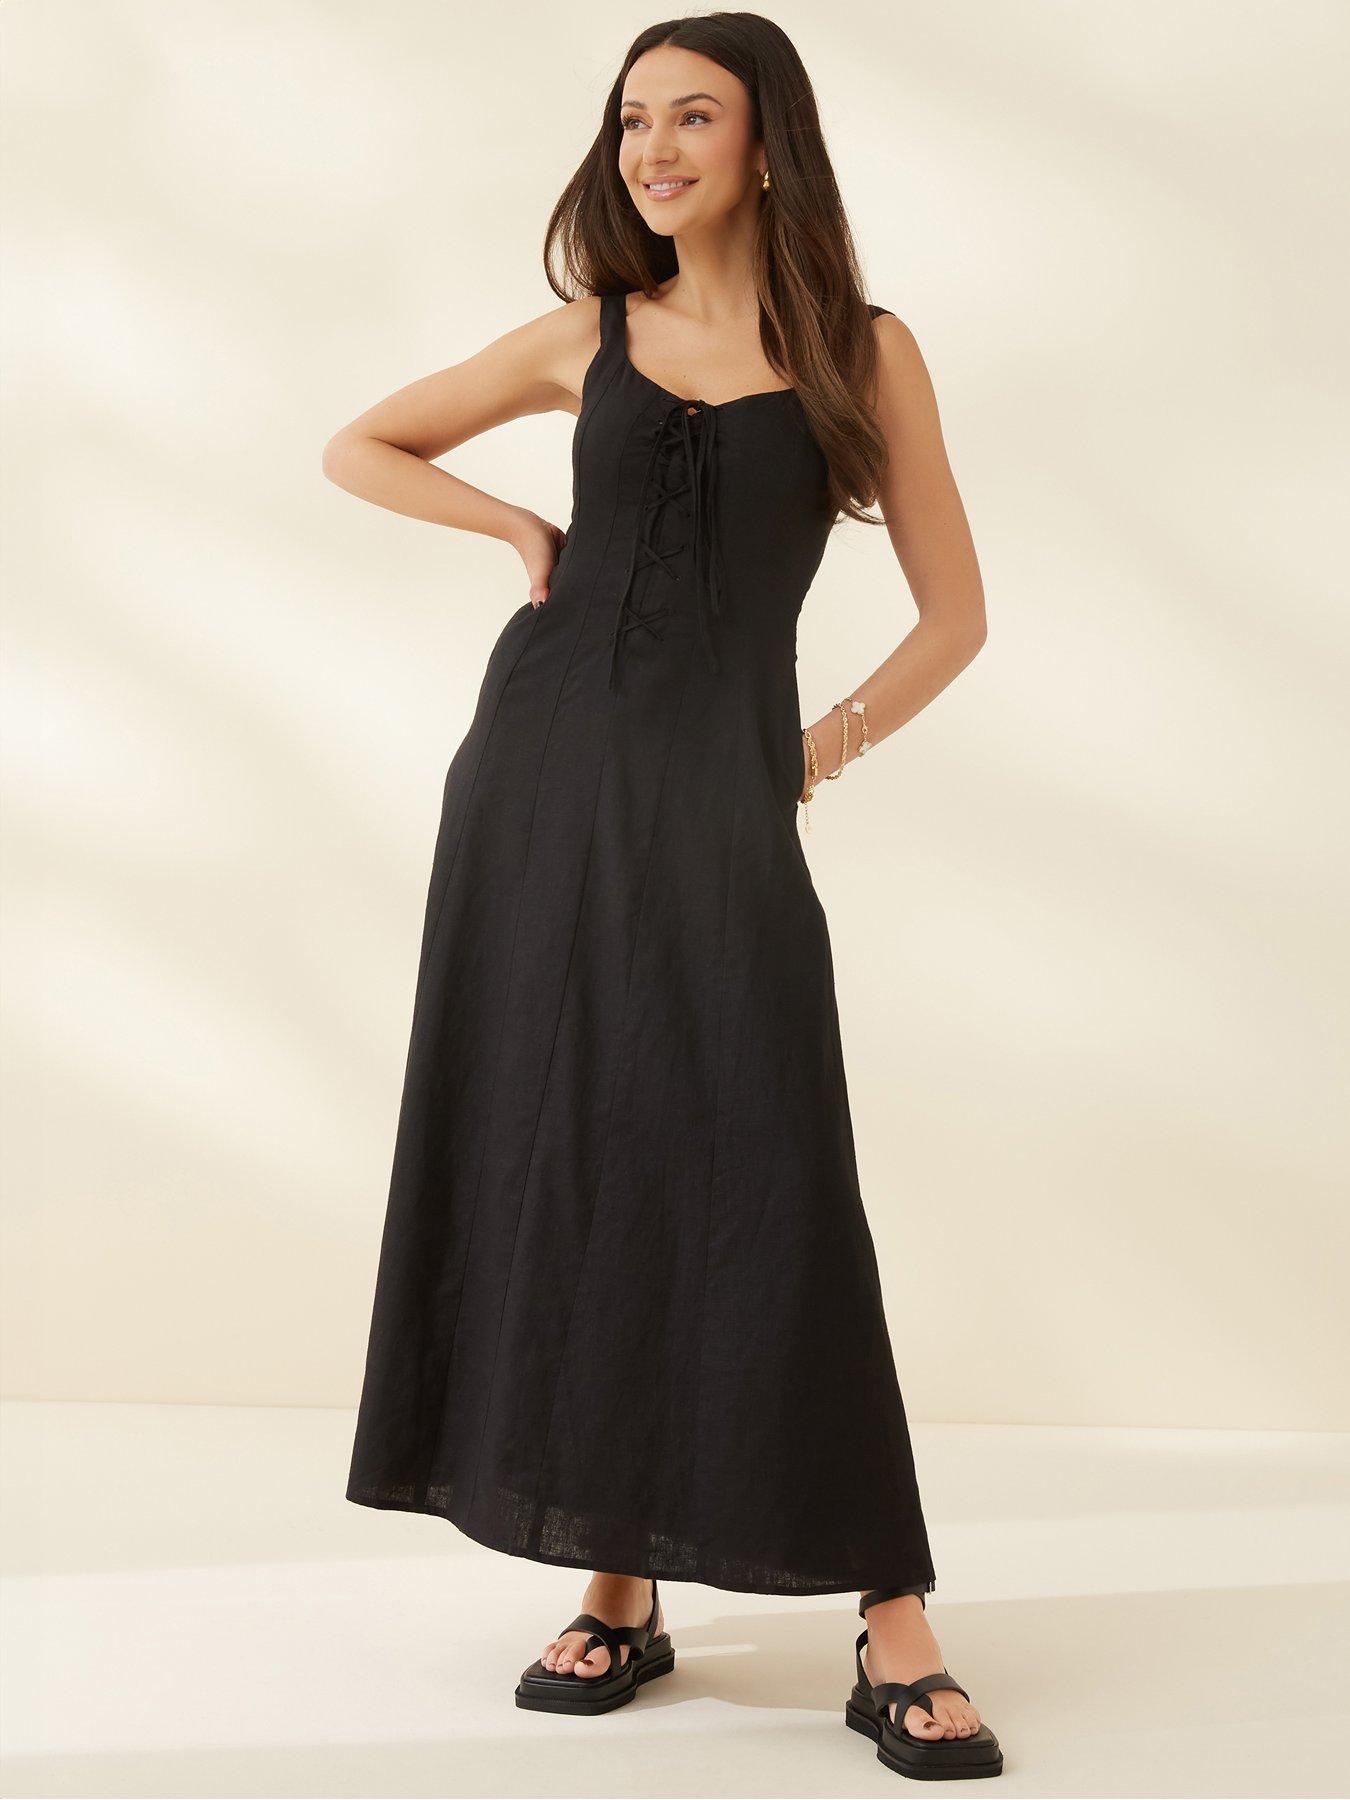 24 Chic Ways To Style Your Little Black Dress - Styleoholic